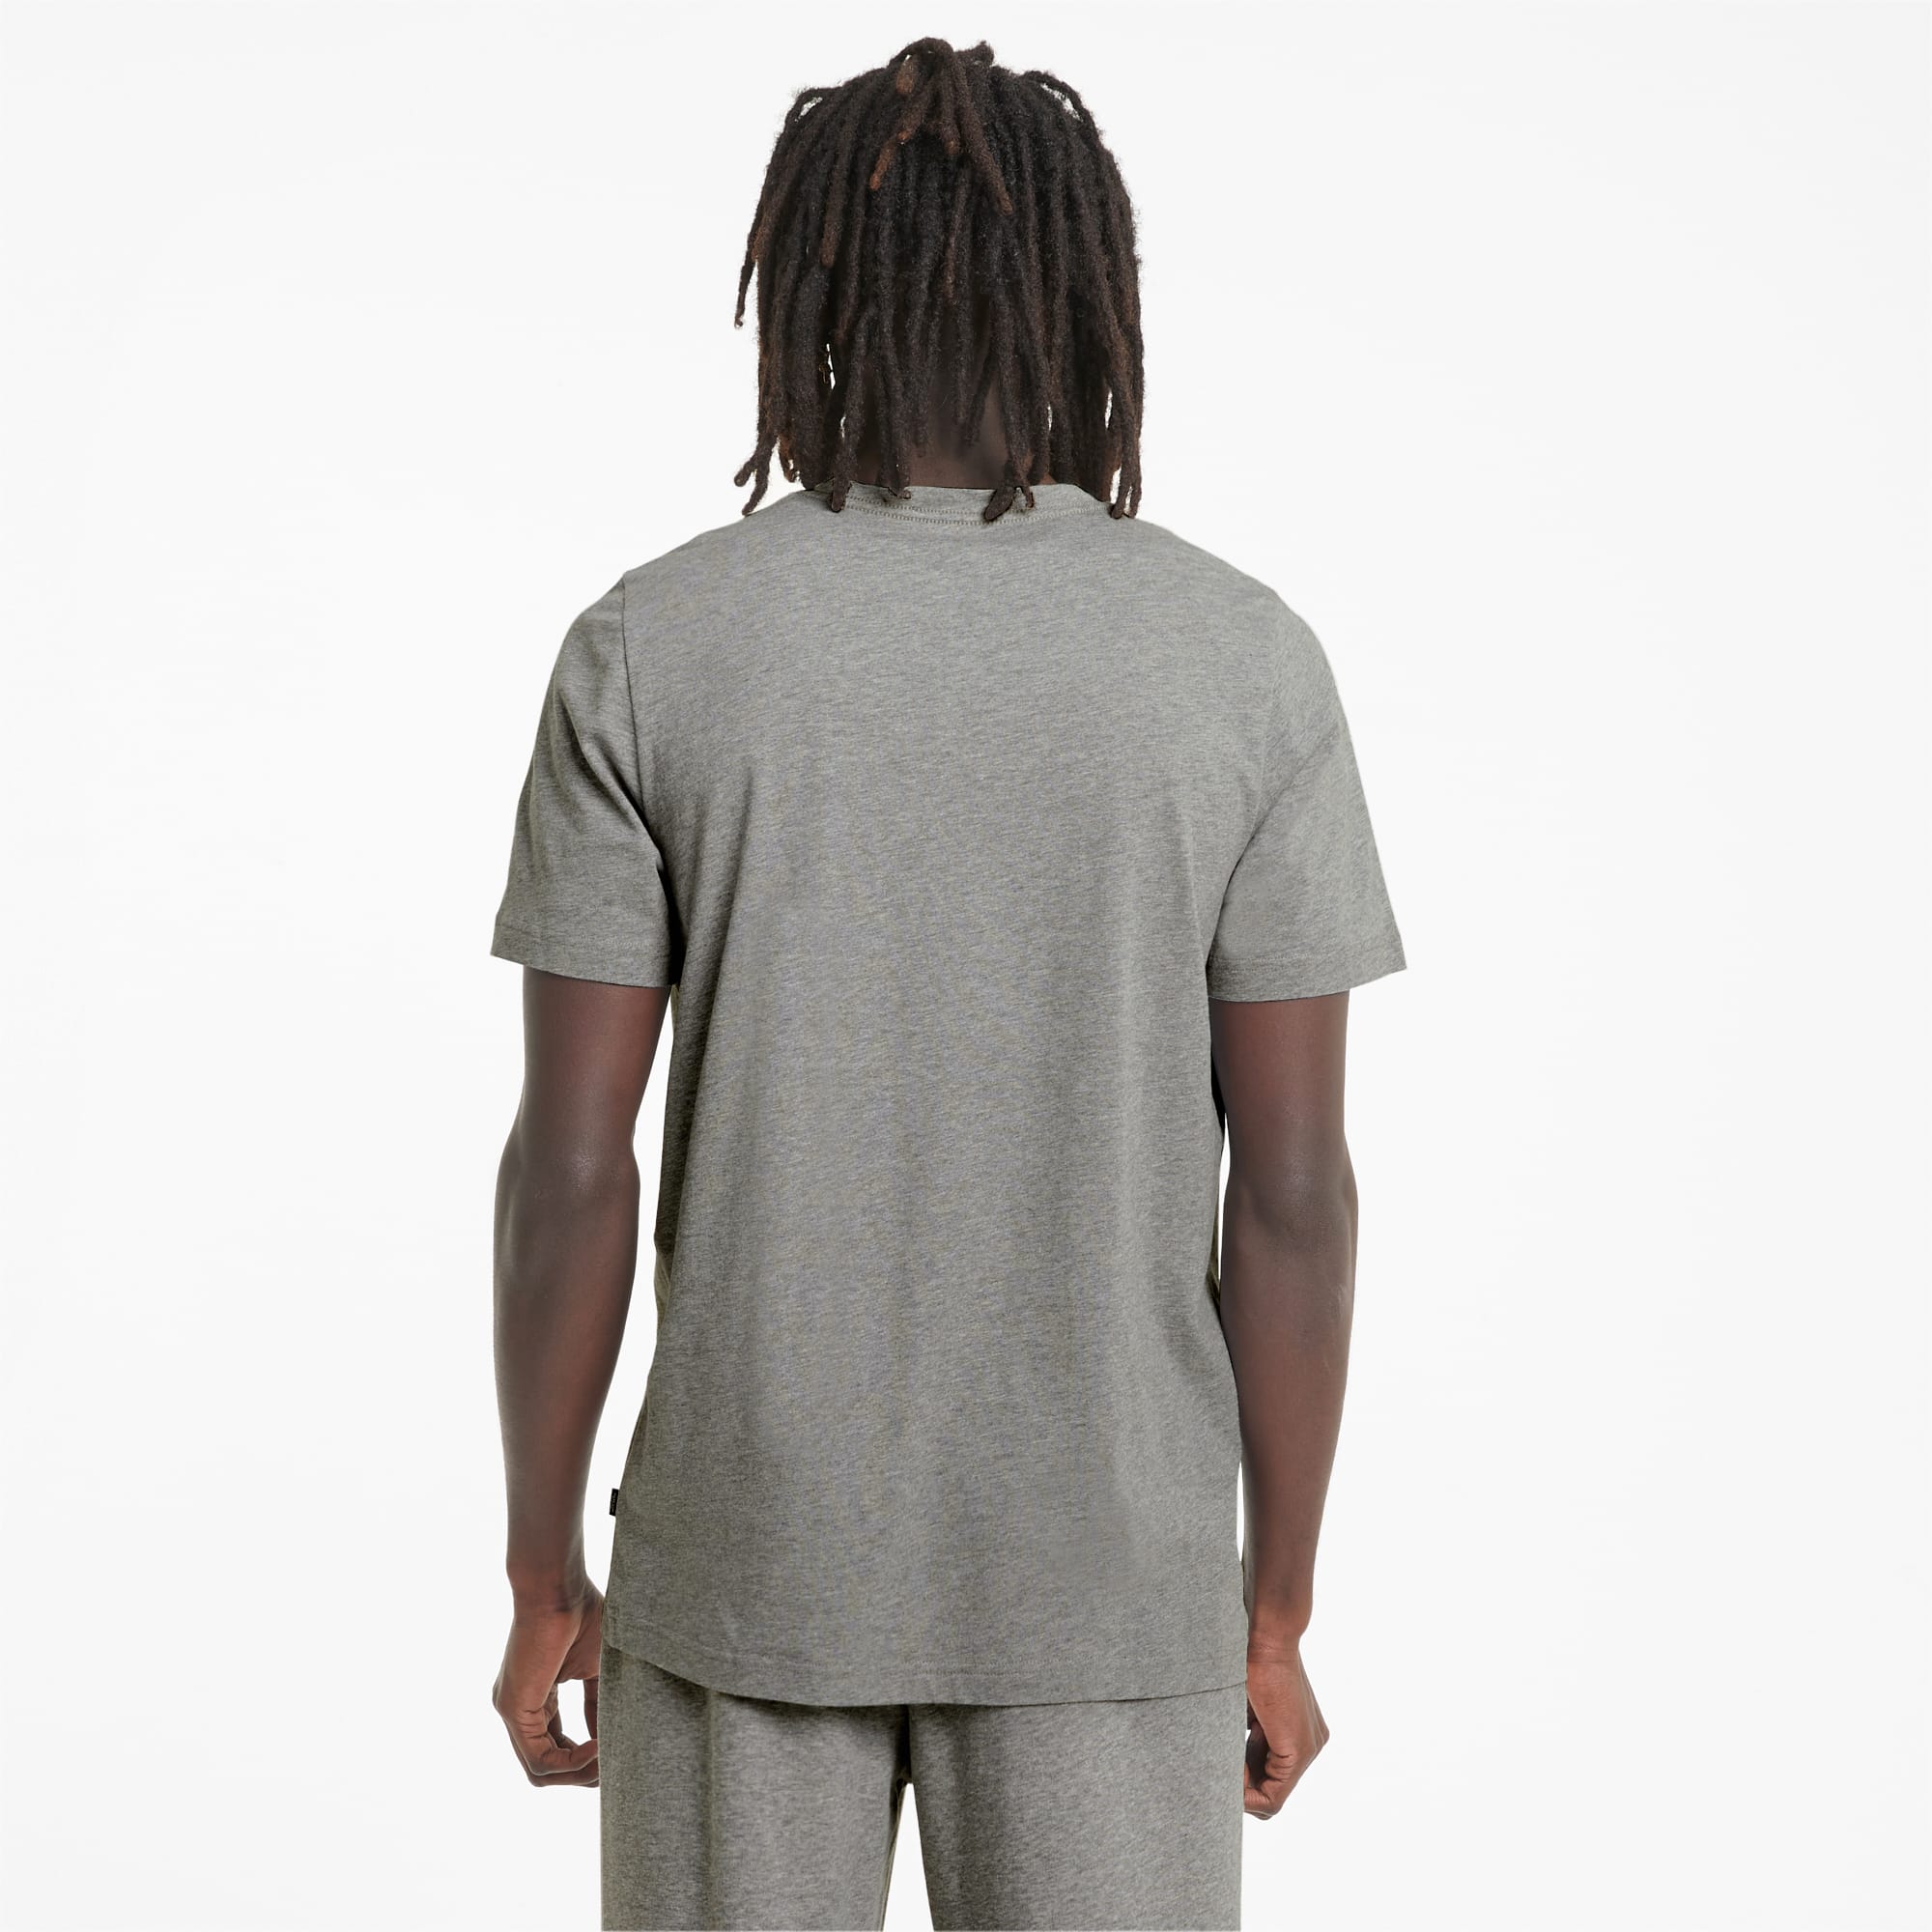 PUMA Essentials V-Neck T-Shirt Men, Medium Grey Heather, Size XL, Clothing